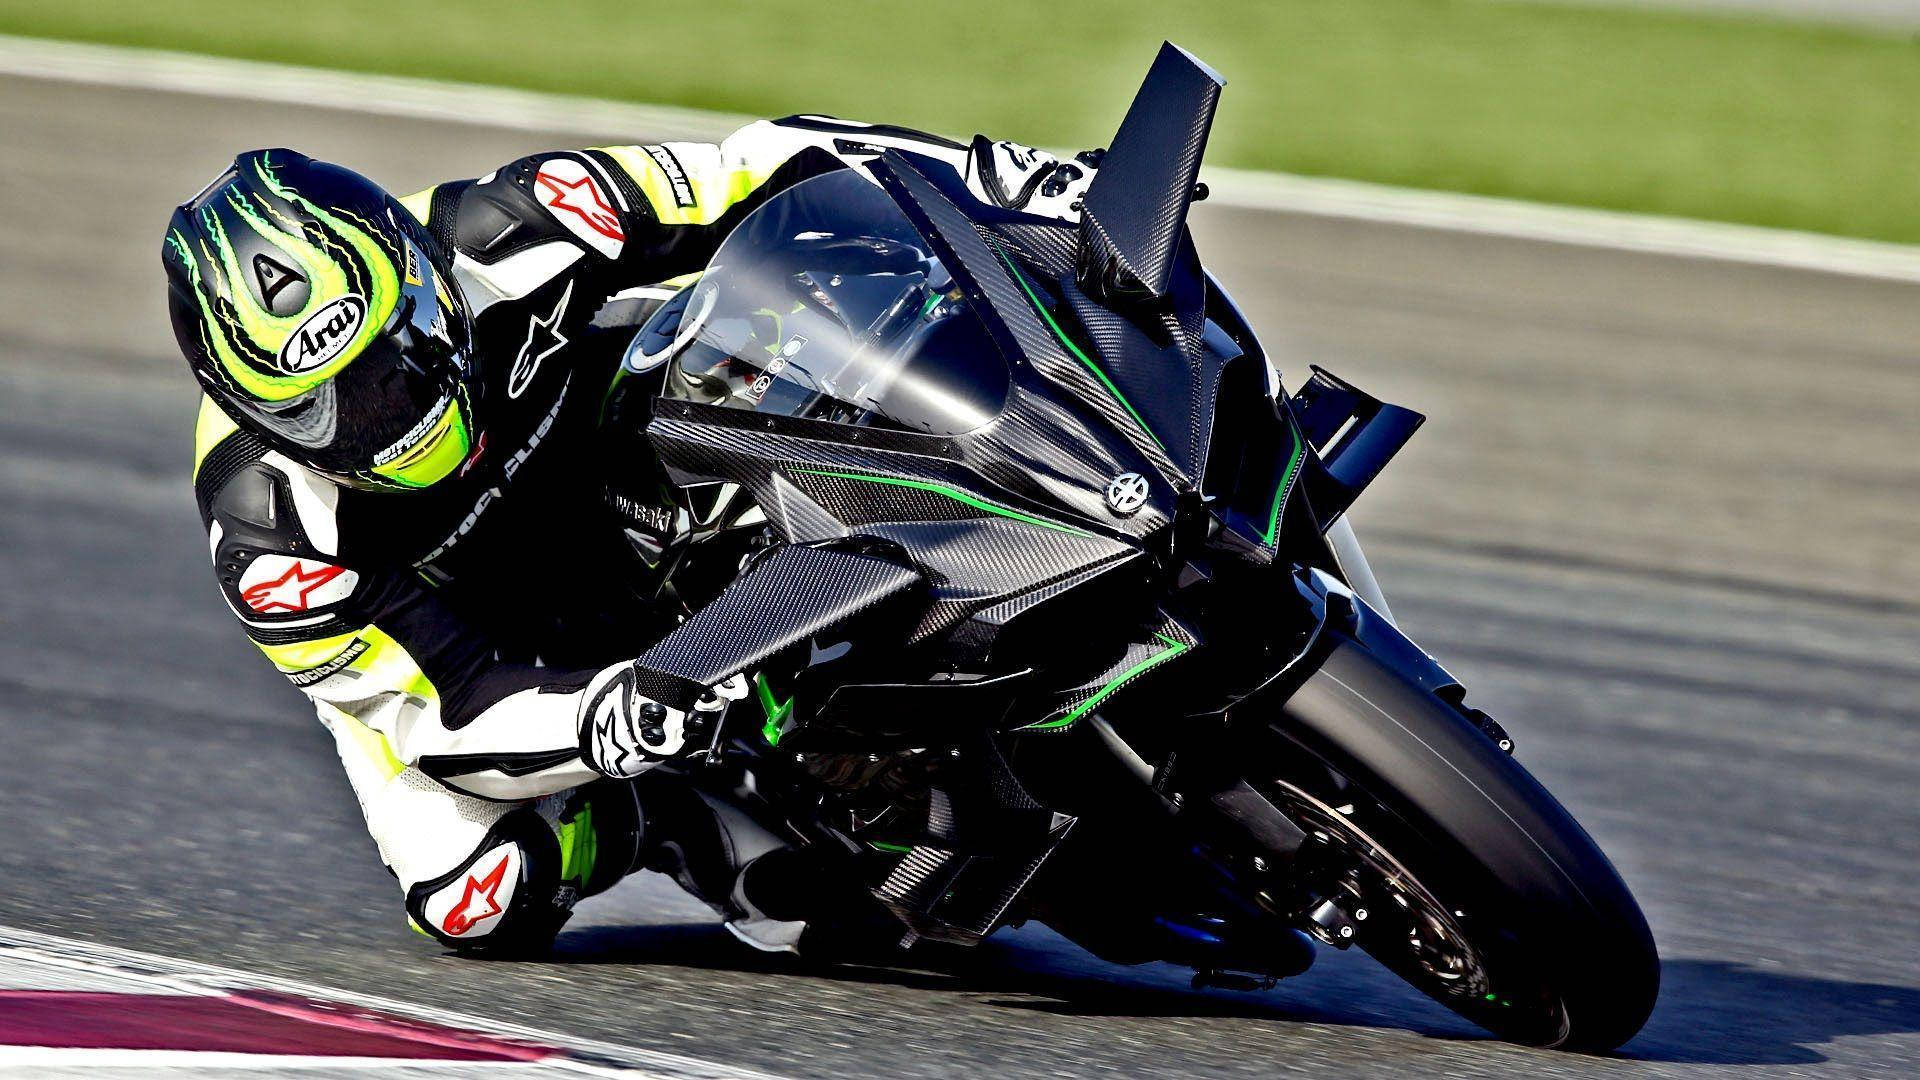 Stunning Speed - Kawasaki H2r In Action